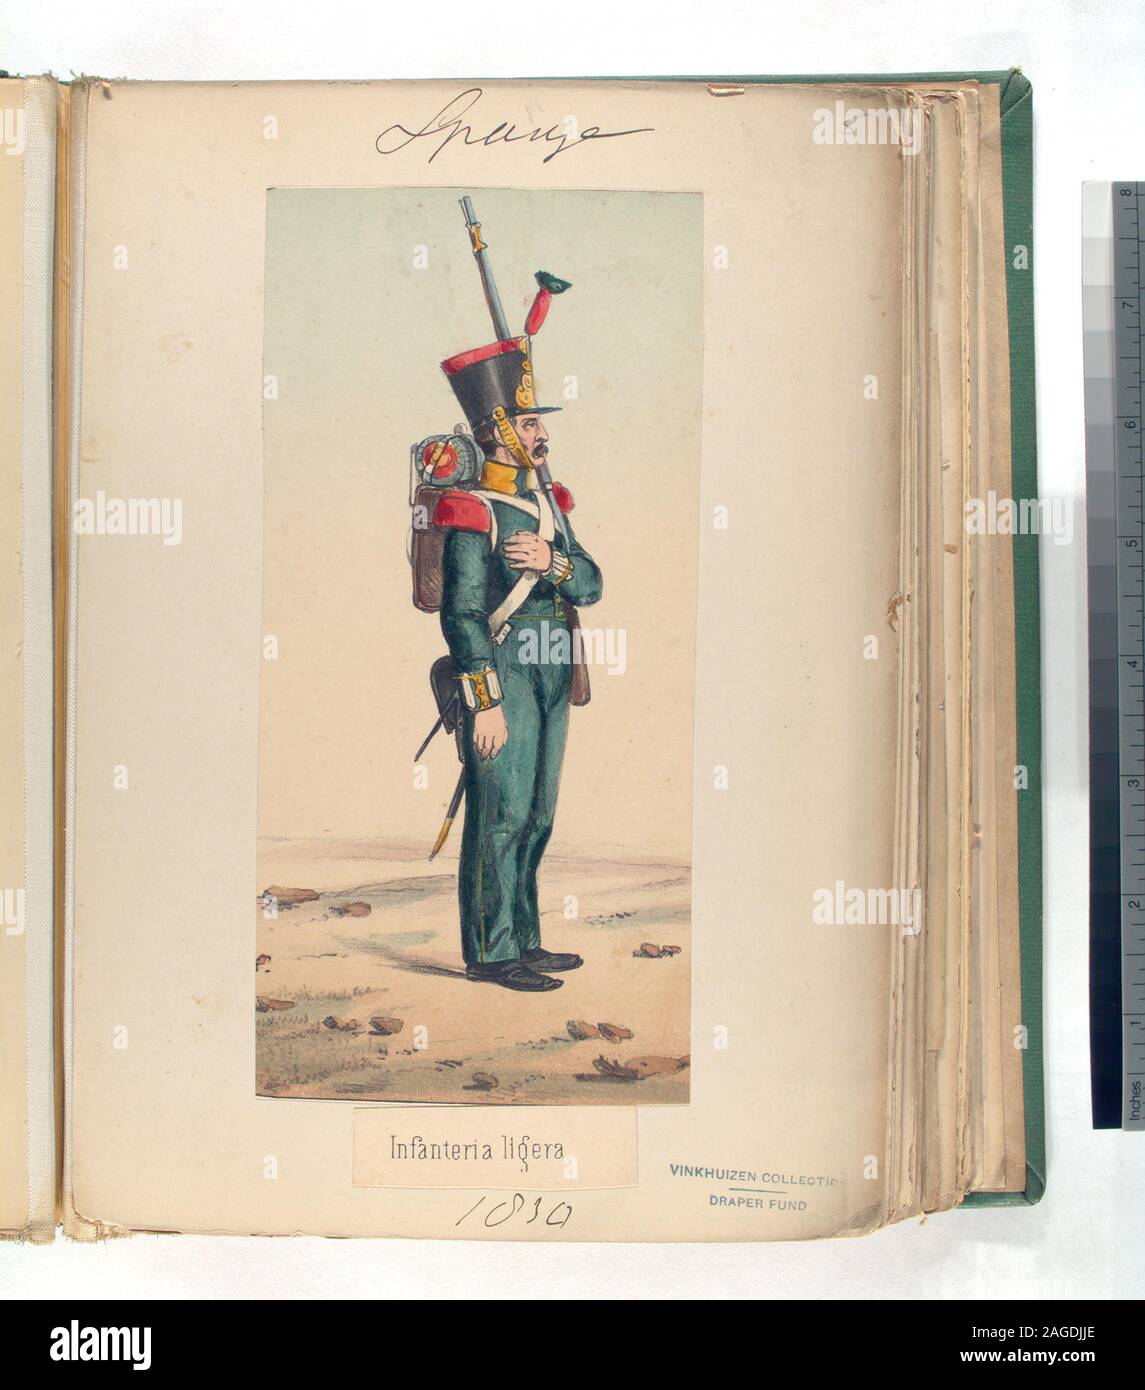 Draper Fund; Infanteria ligera. 1830 Stock Photo